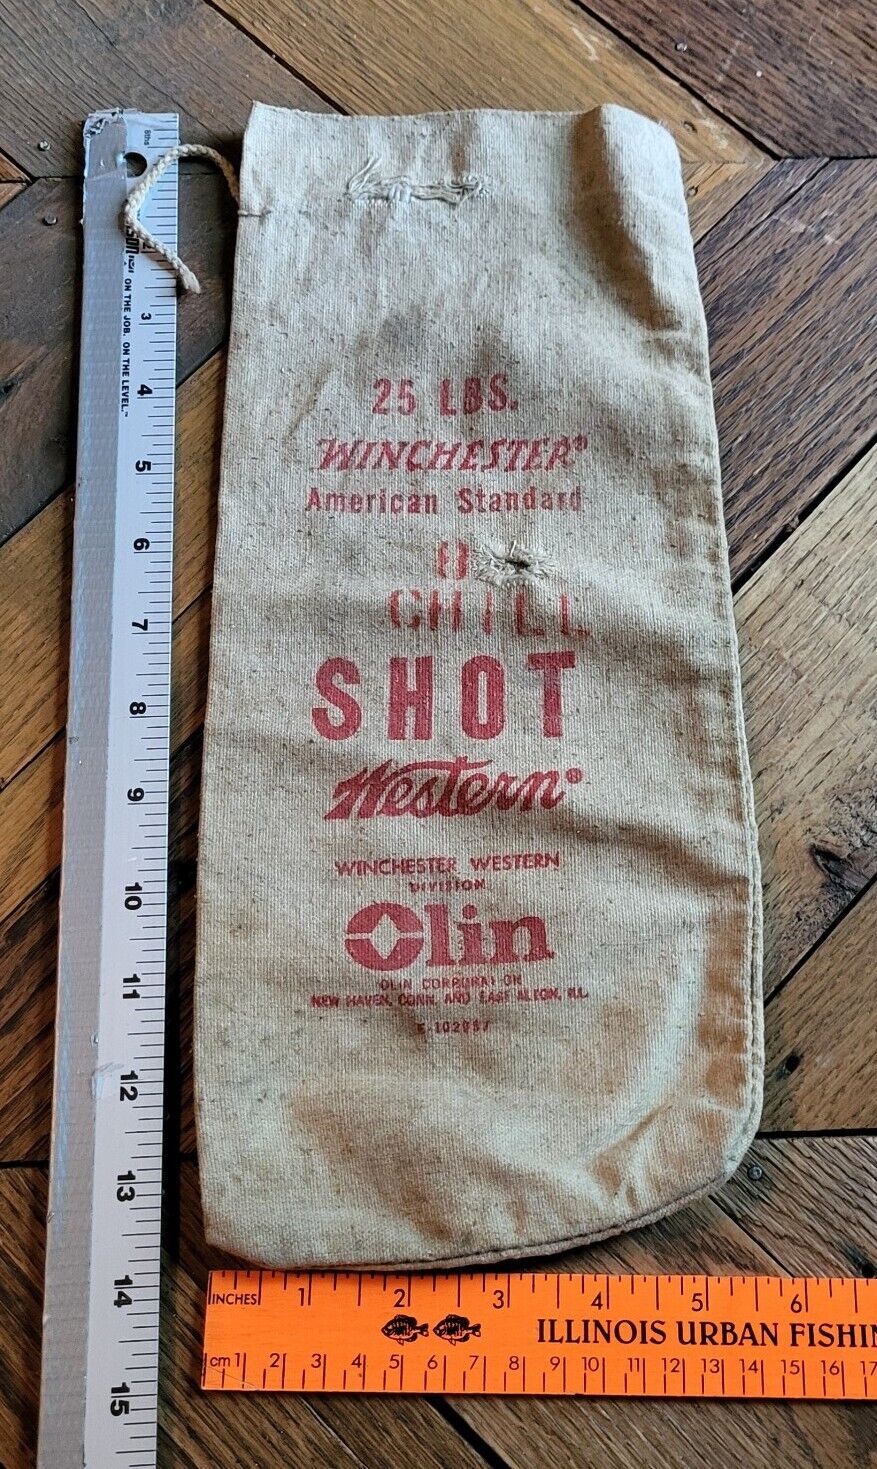 VTG Antique CLOTH SACK BAG - WINCHESTER WESTERN OLIN CHICAGO ILLINOIS 8 Shot